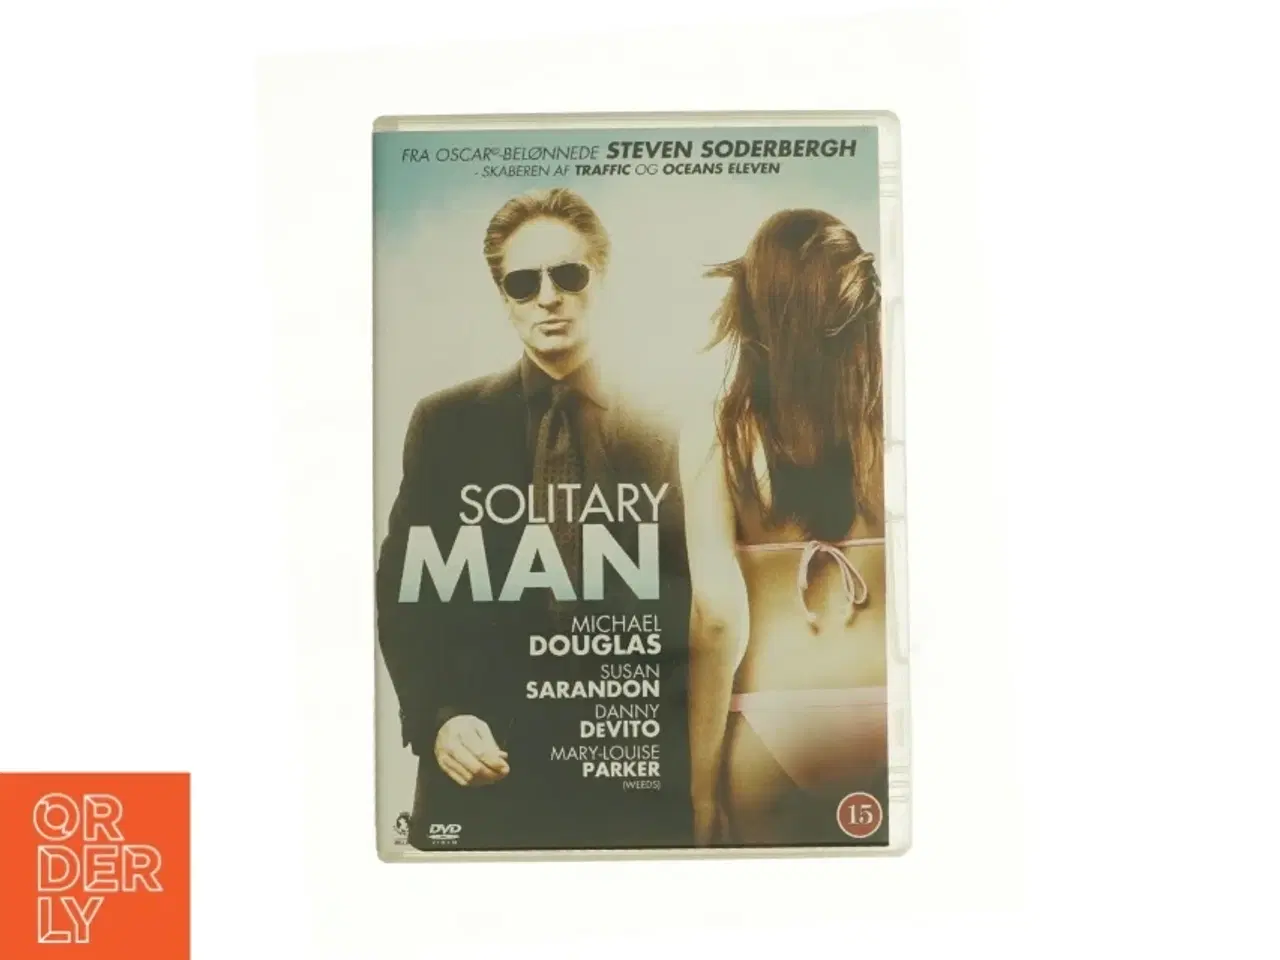 Billede 1 - Solitary man fra dvd